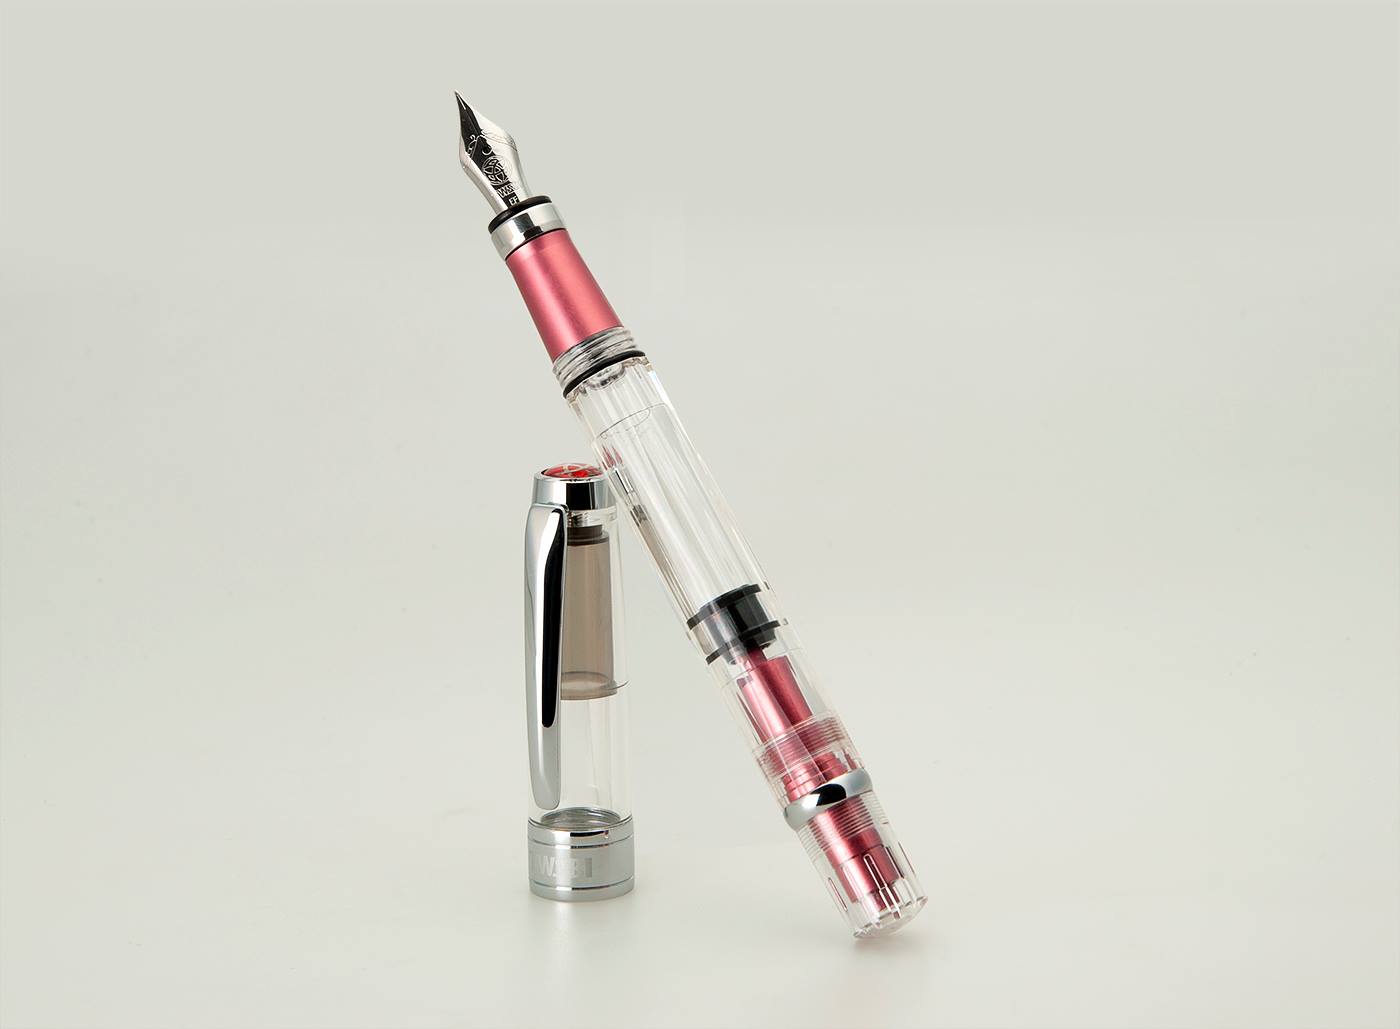 TWSBI Diamond 580AL Rose Fountain Pen